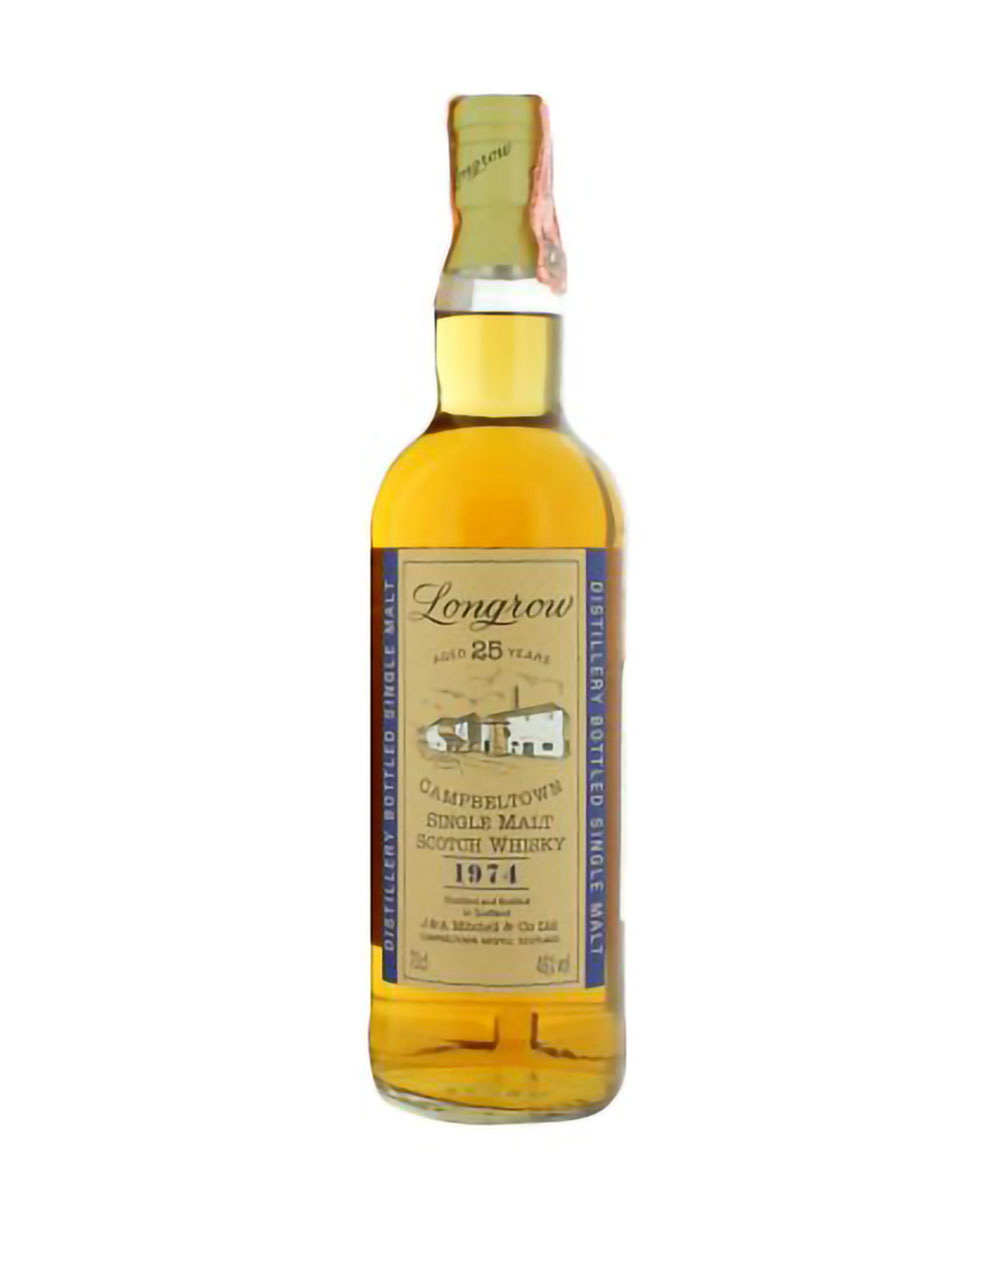 Longrow 25 Year Old 1974 Vintage Single Malt Scotch Whisky